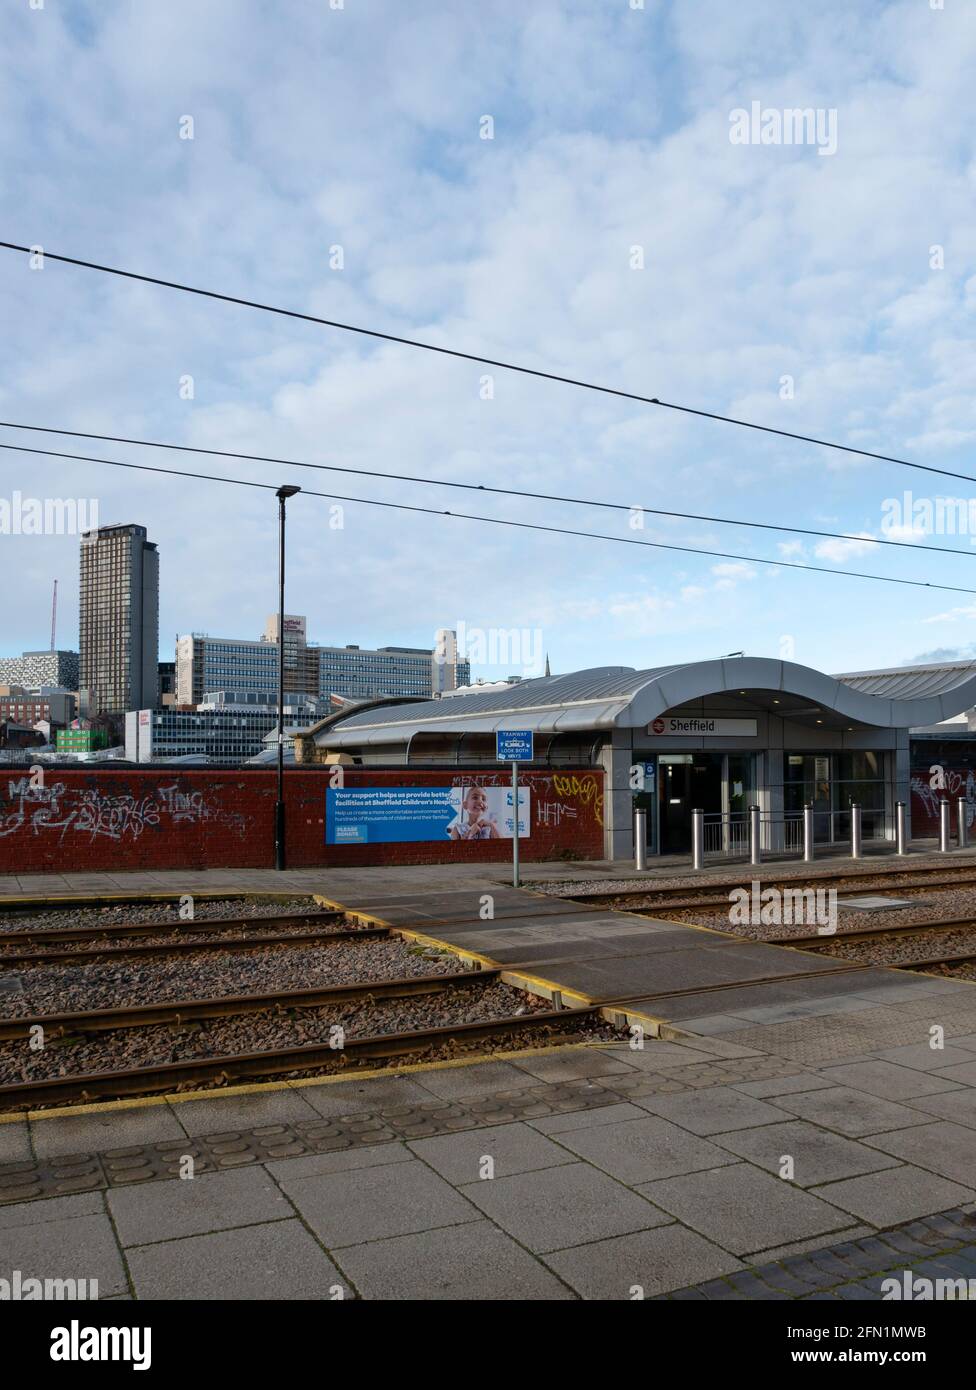 Sheffield station. Sheffield, South Yorkshire, England, UK. Stock Photo